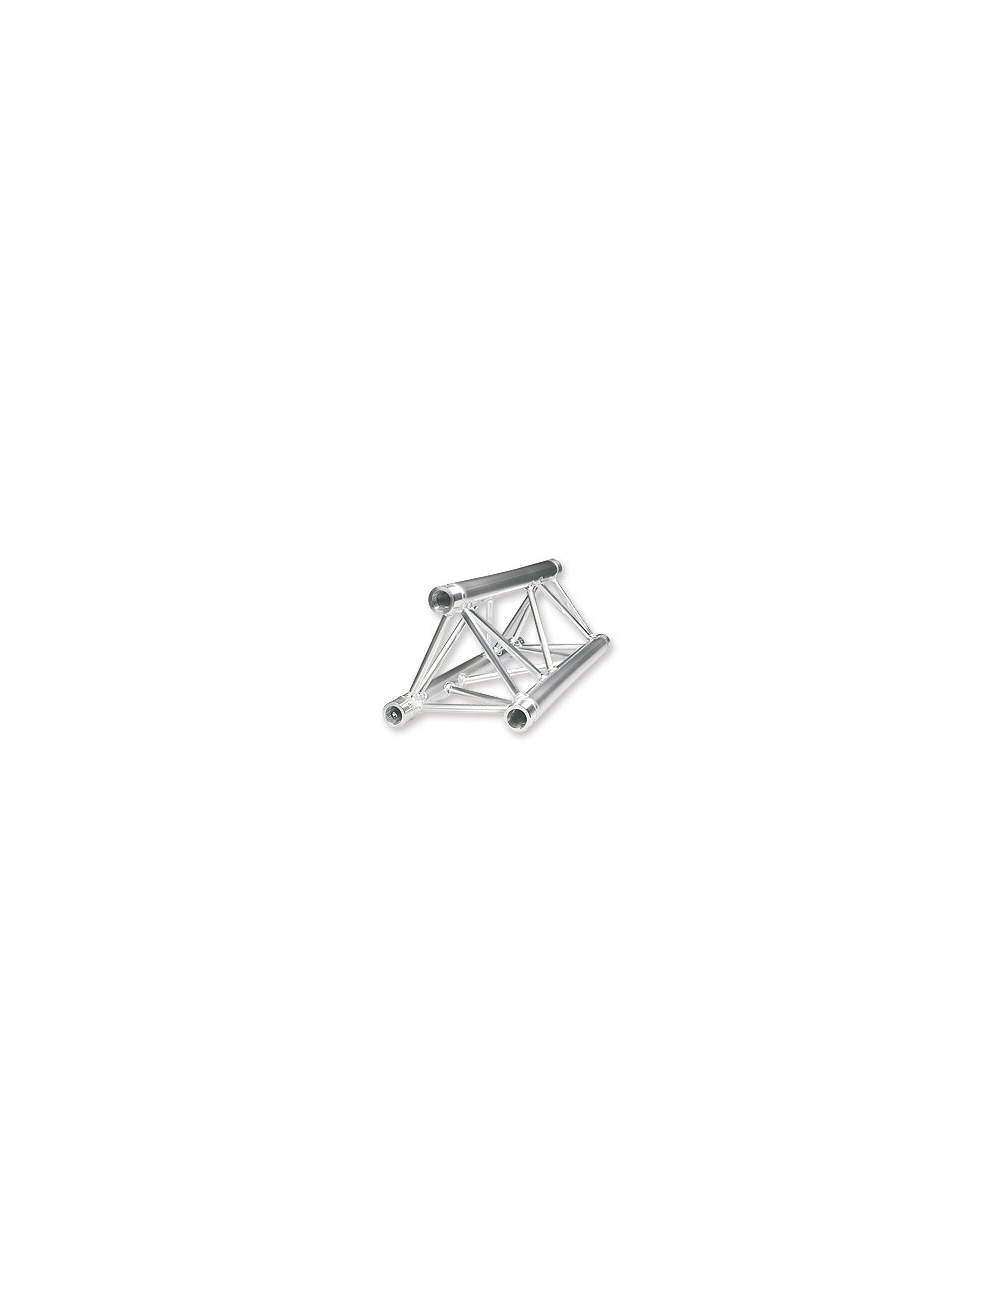 Structure triangulaire 290 ASD 3m50 - SX29350